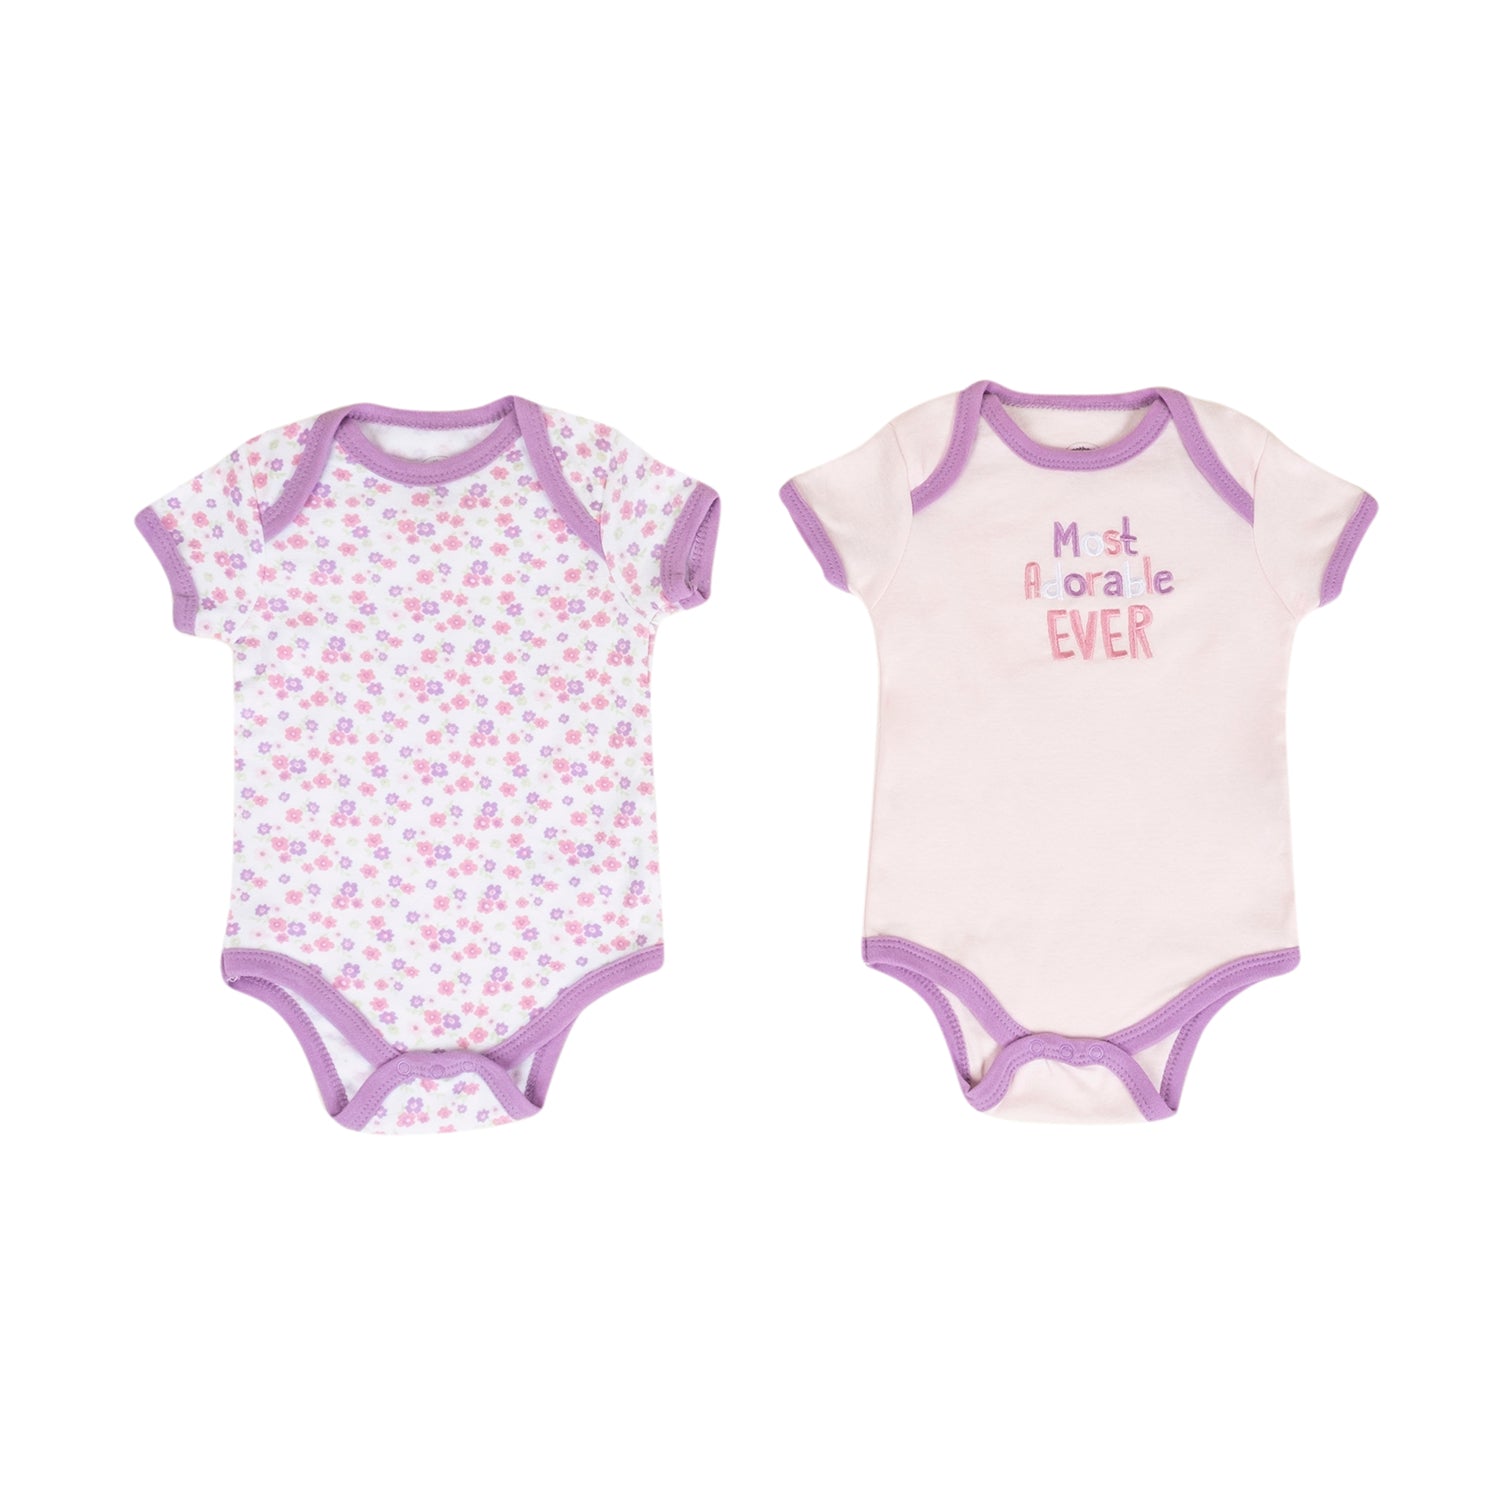 Baby Moo Adorable Gift Set 5 Piece With Bodysuits, Pyjama, Bib And Socks - Purple